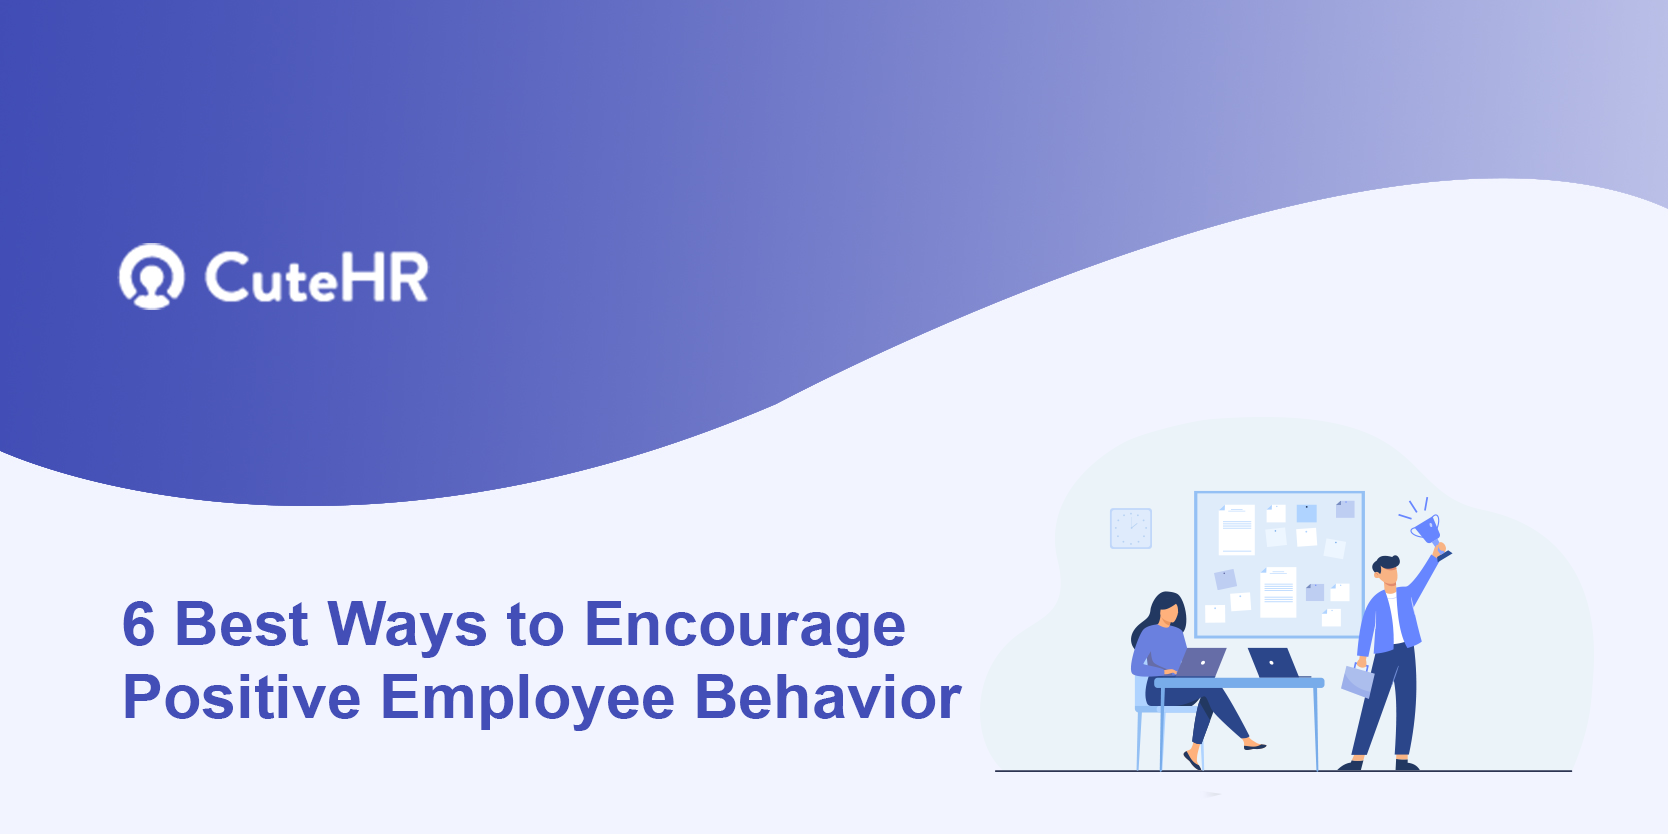 Employee Behavior